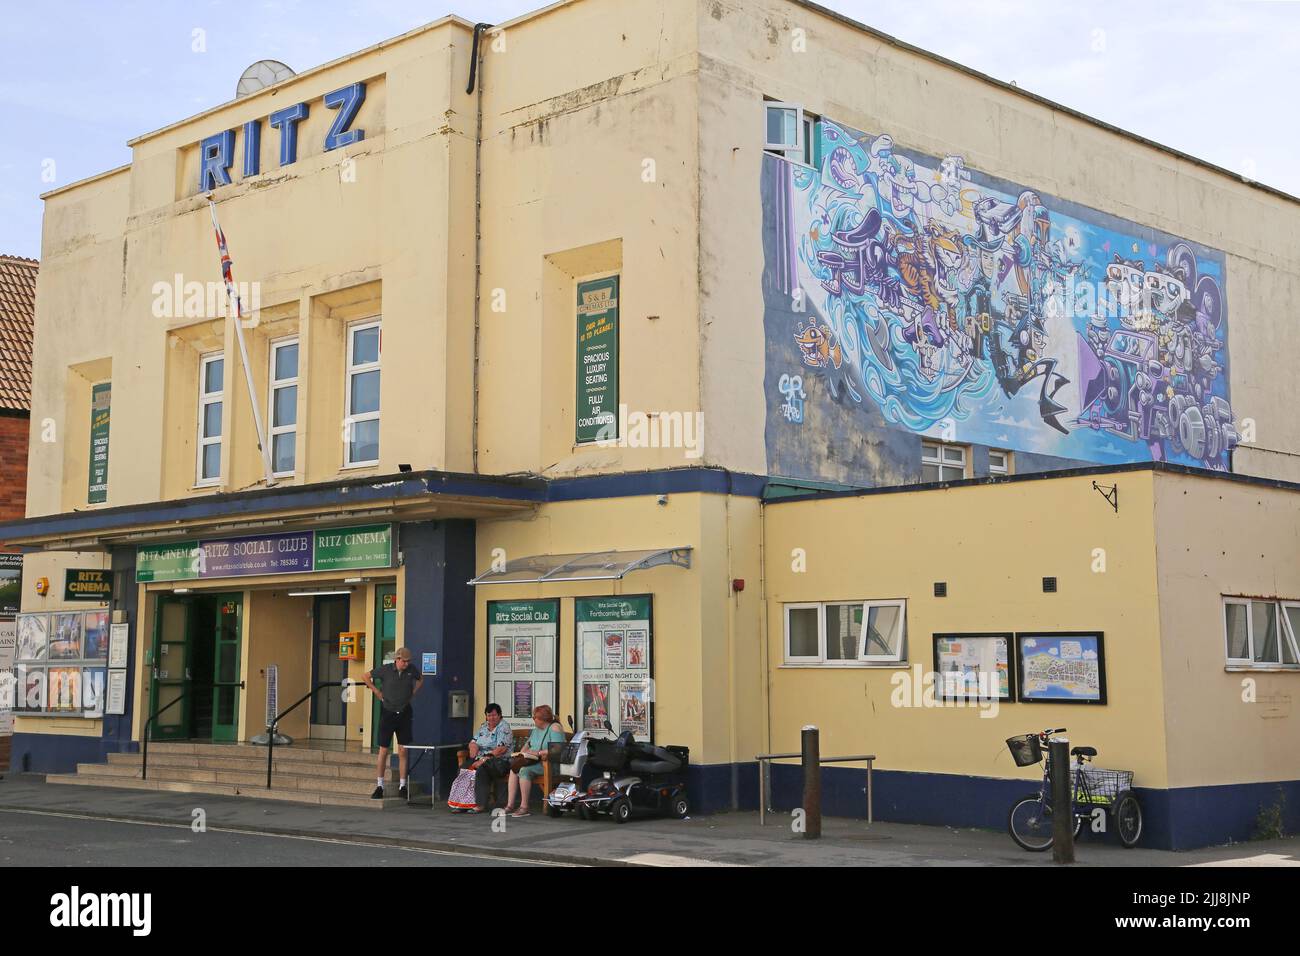 Ritz Cinema and Social Club, Victoria Street, Burnham-on-Sea, Sedgemoor, Somerset, England, Great Britain, United Kingdom, UK, Europe Stock Photo